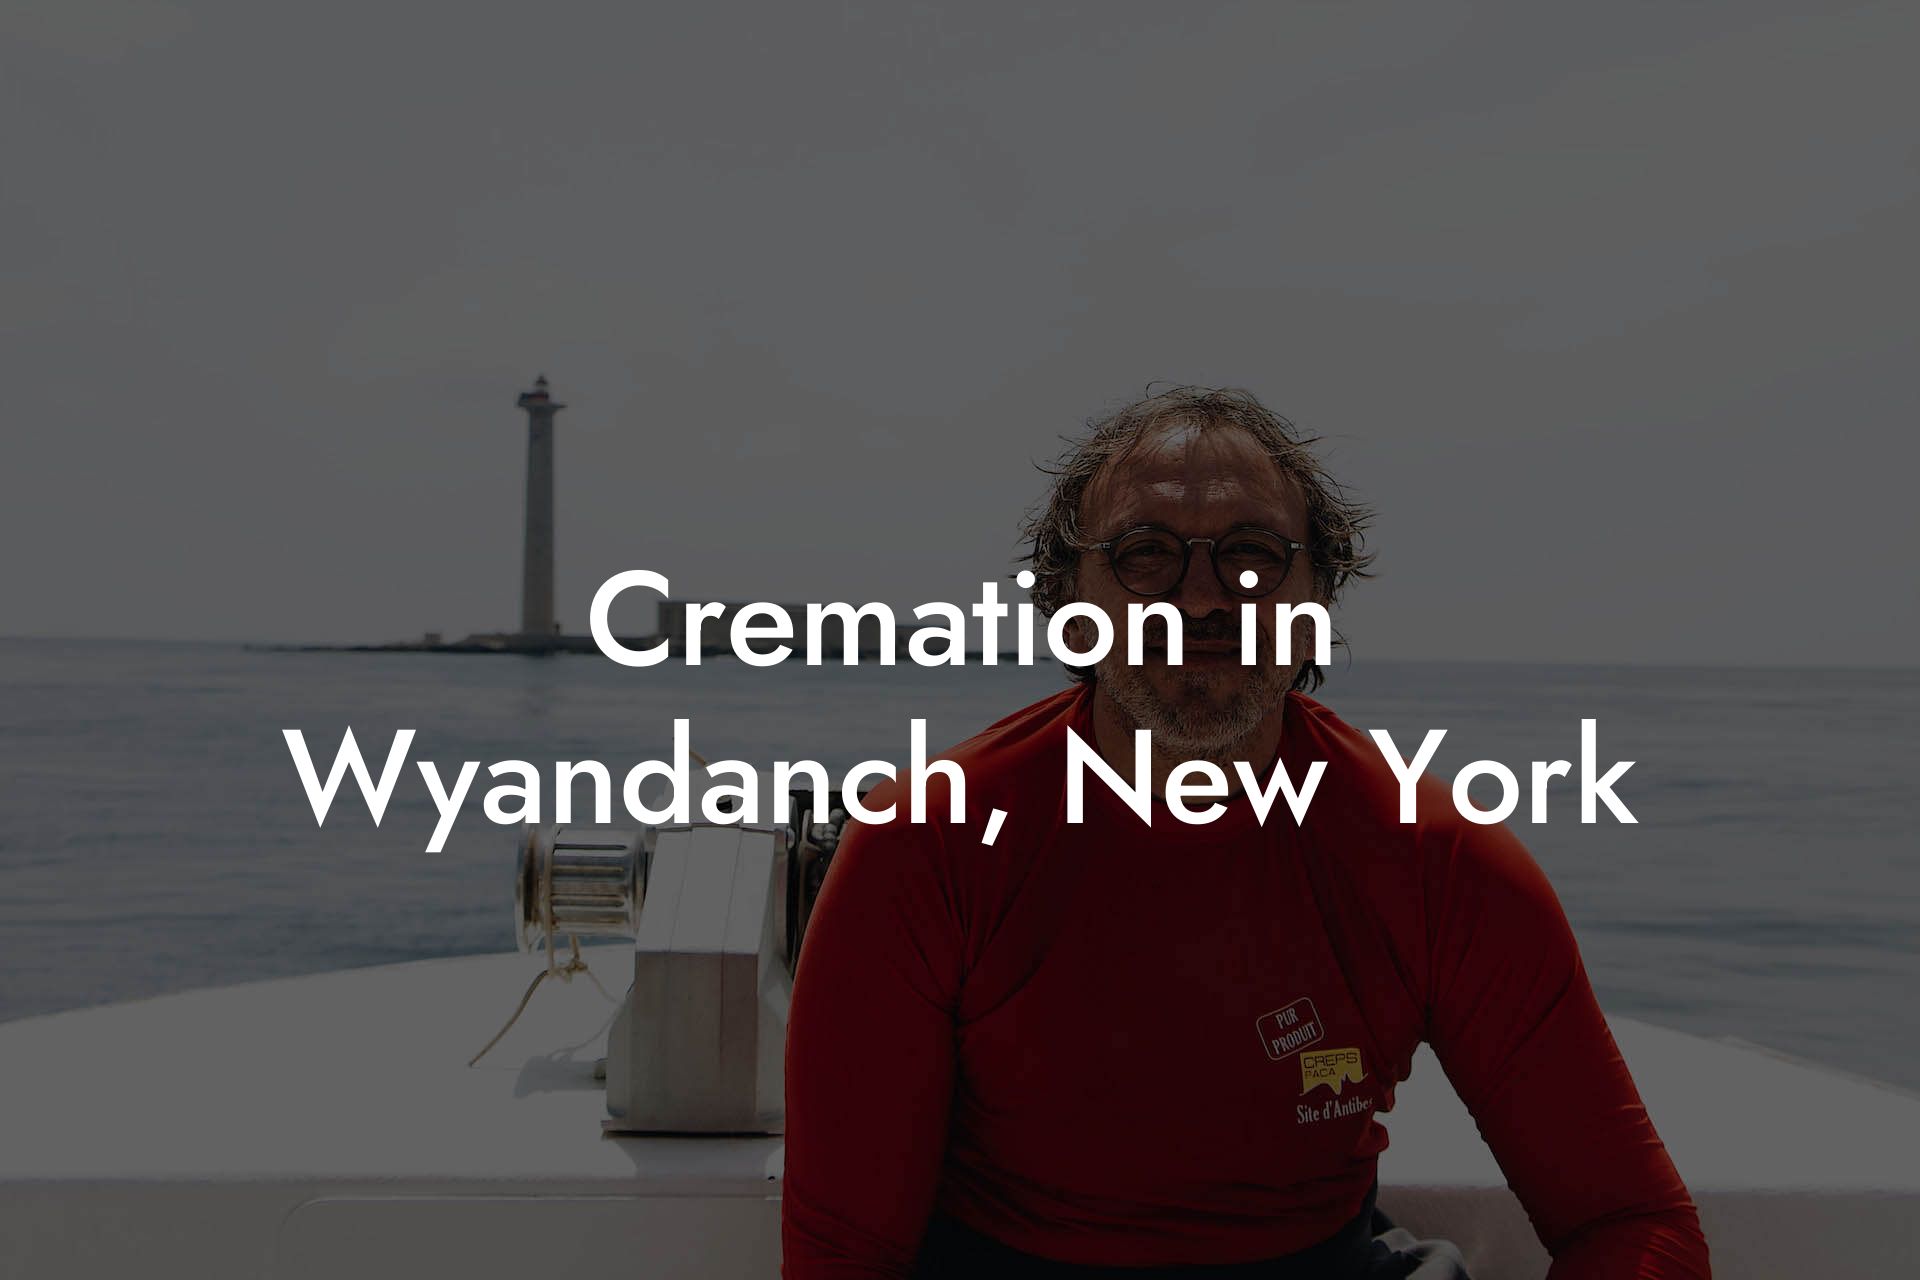 Cremation in Wyandanch, New York